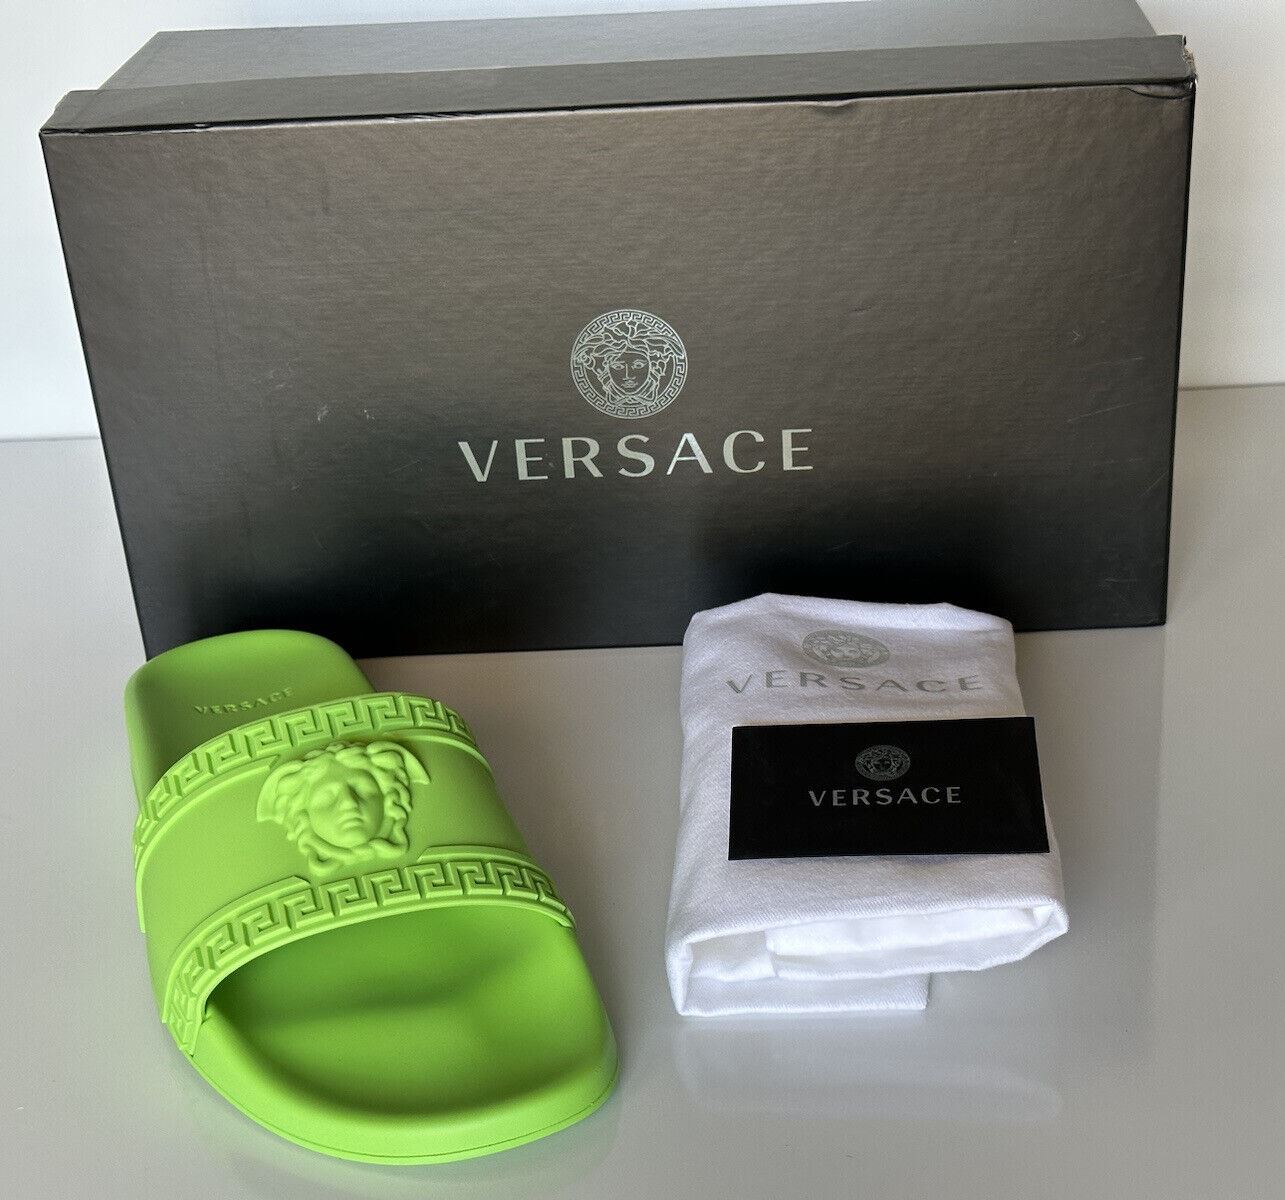 NIB Versace Босоножки-шлепанцы Medusa Head Neon Green 11 США (44 евро) DSU5883 Италия 